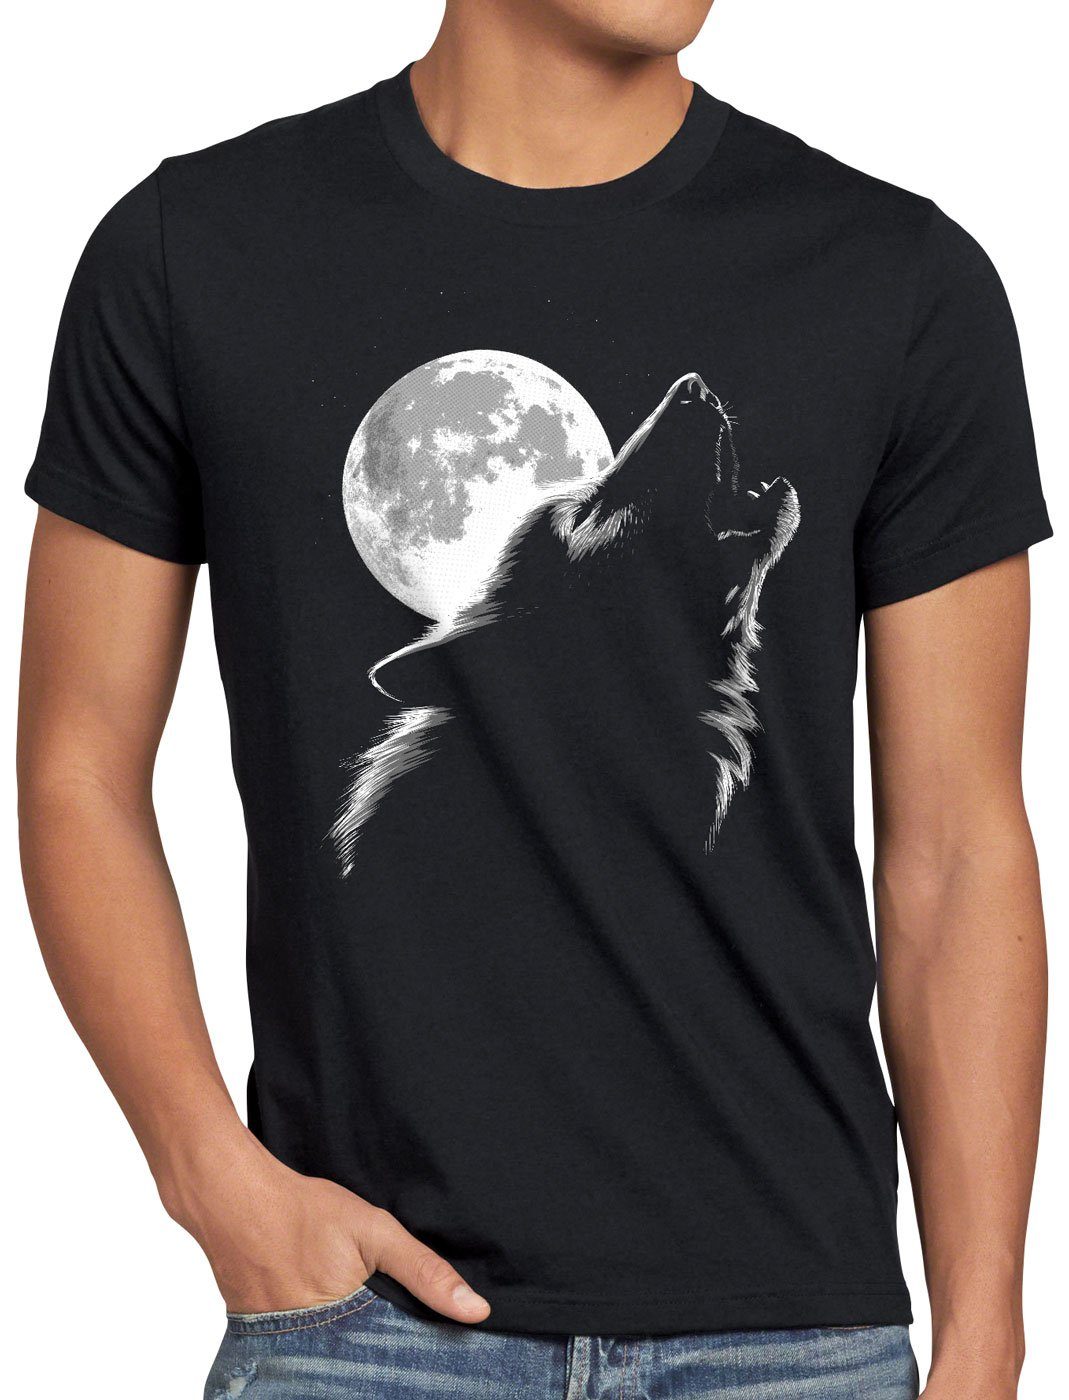 style3 Print-Shirt Herren T-Shirt Heulender Wolf bei Vollmond rudel wald